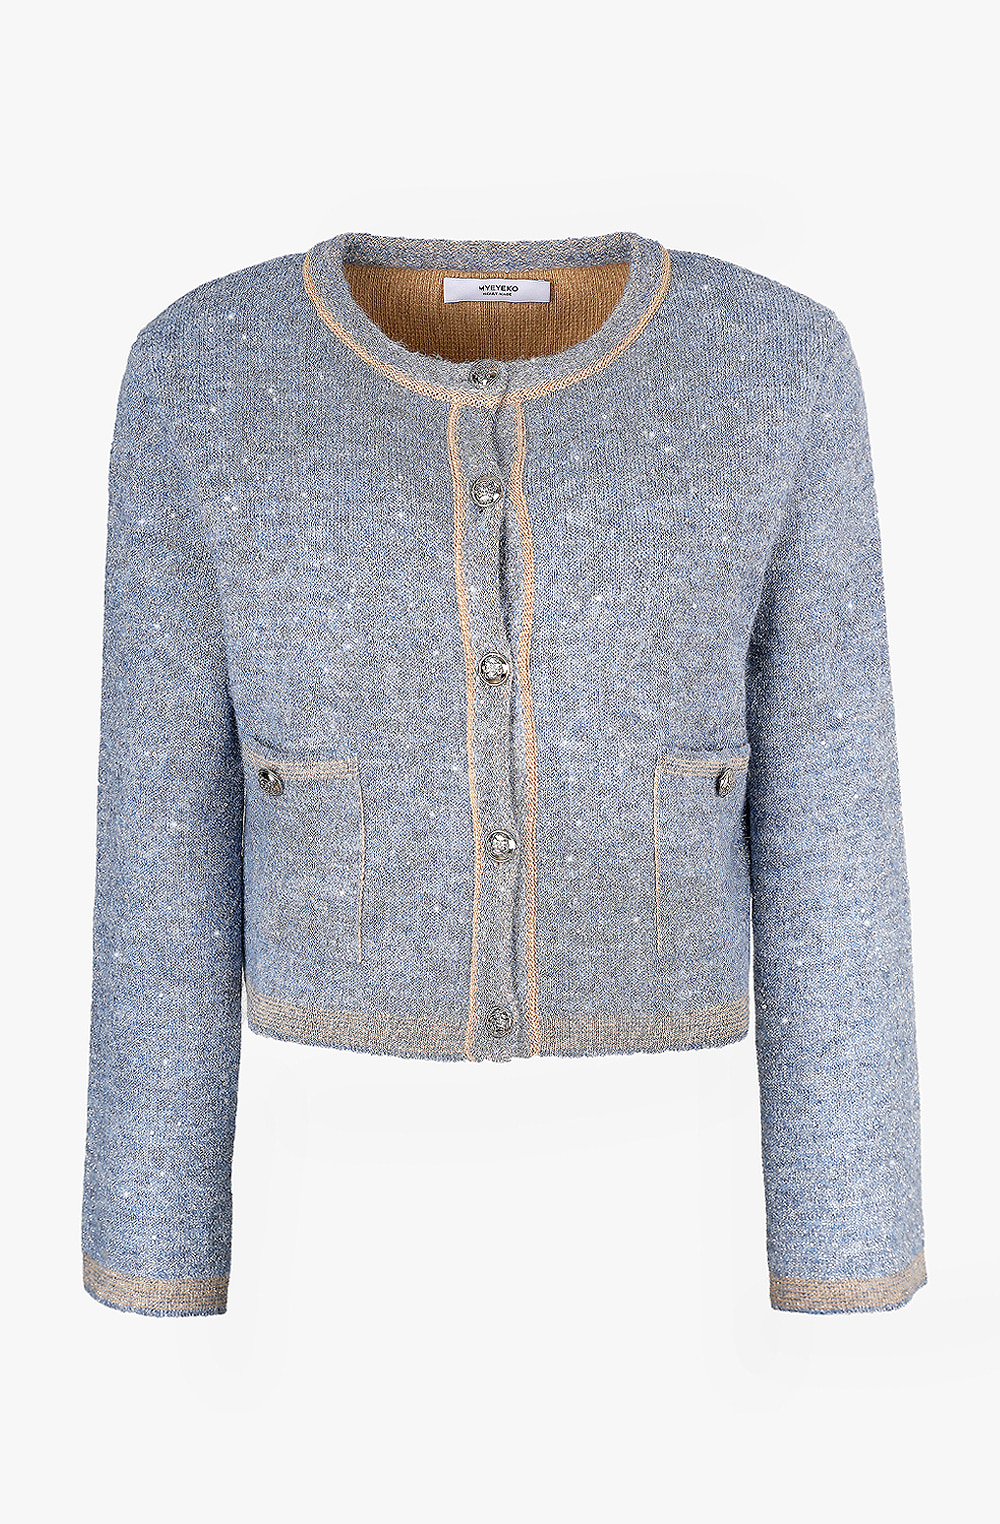 HIGH QUALITY LINE - Sequin Embellished Knit Jacket (POWDER BLUE) 2차 예약 오더